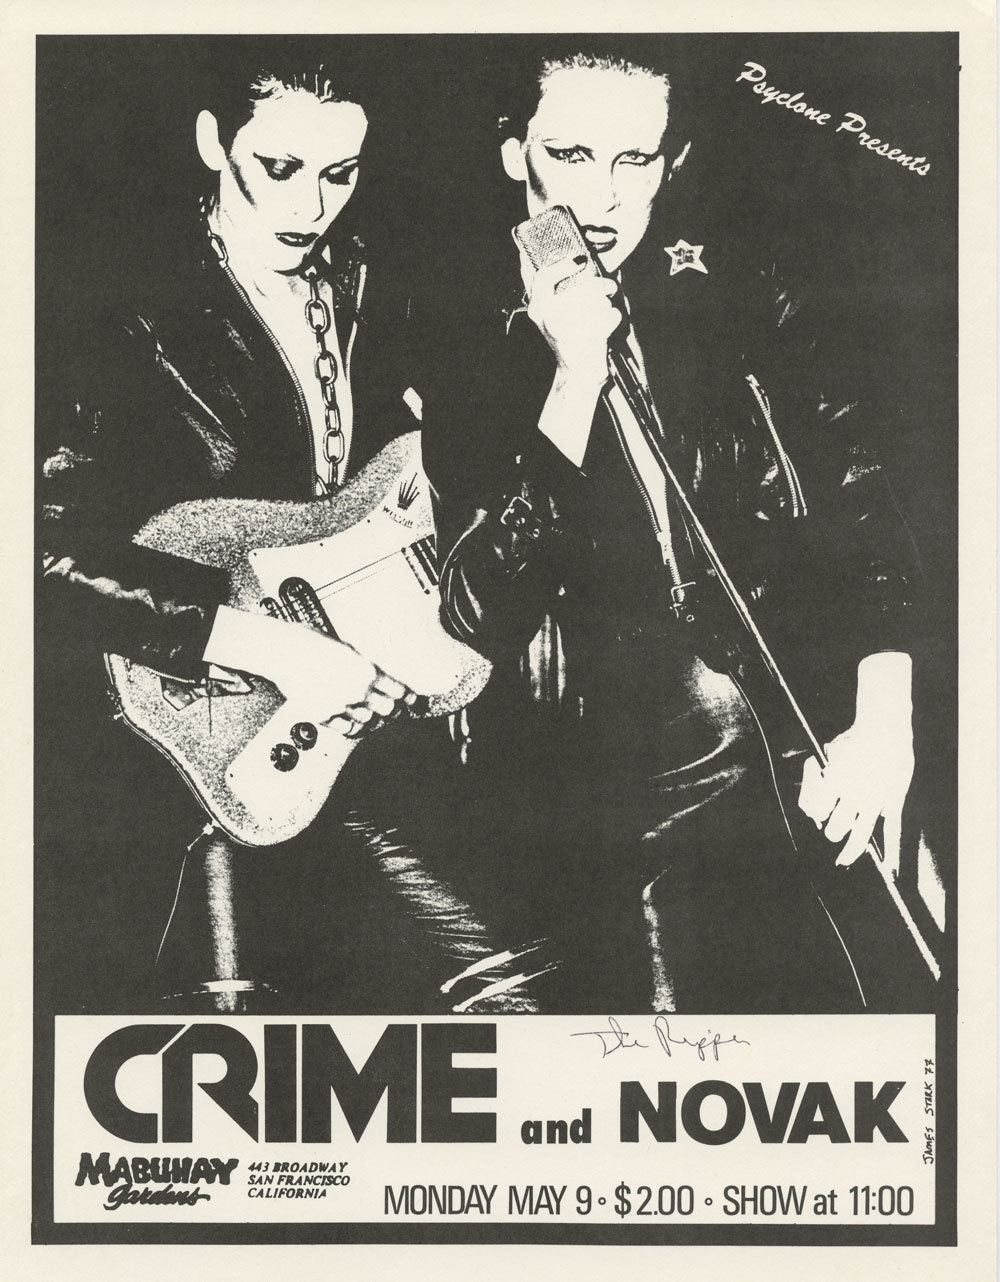 Crime Handbill 1977 May 9 Mabuhay Gardens Ron Greco Signed